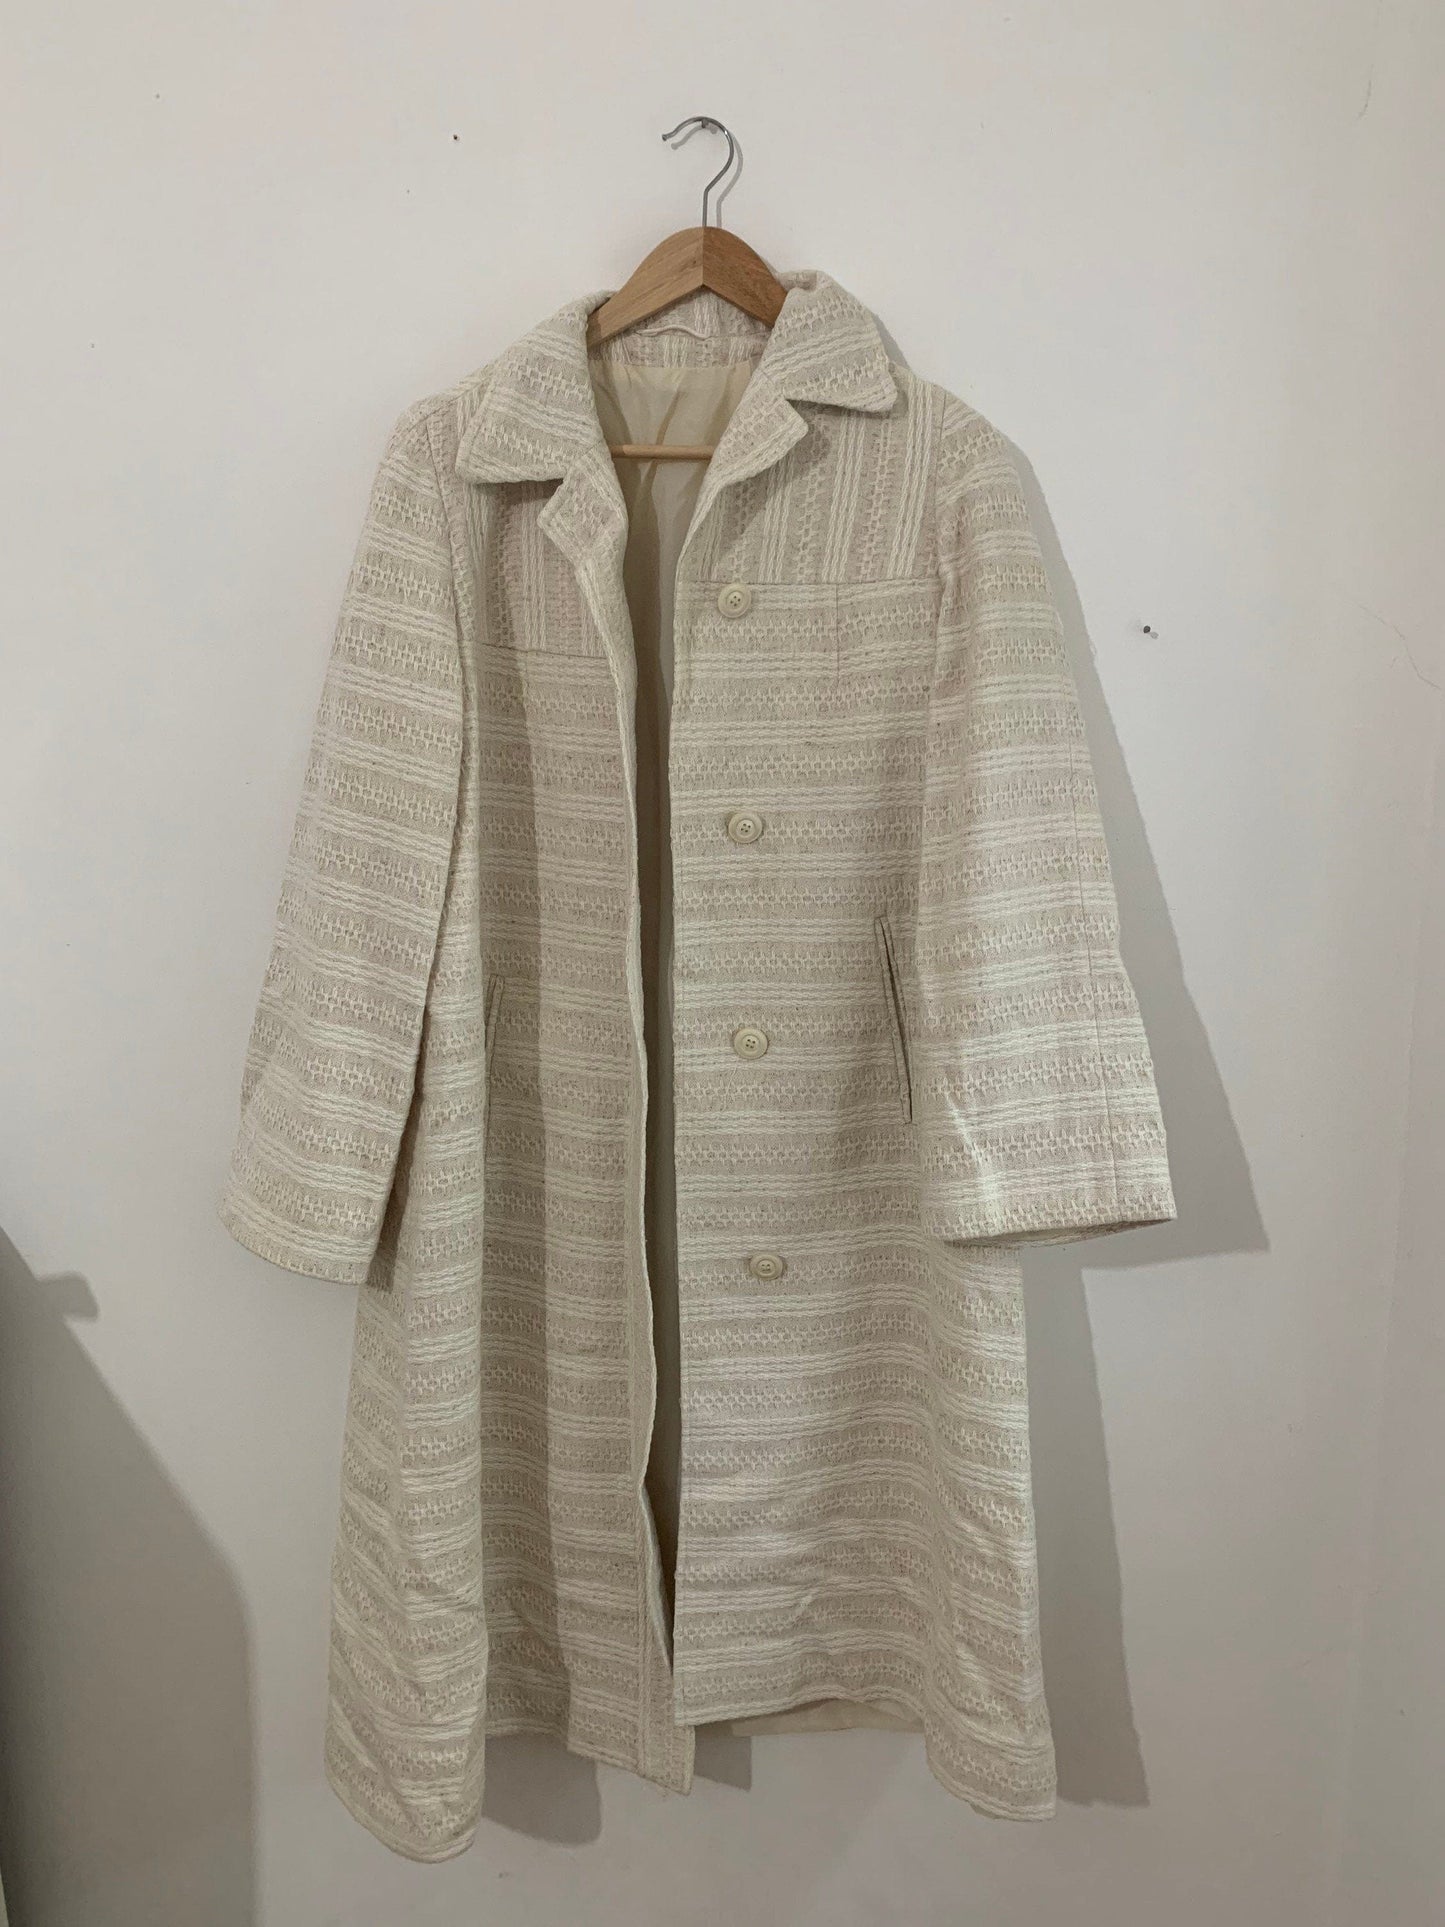 Vintage White Coat 1960s Swing Jacket Big Buttons Terylene Wool Mix - Dereta Wool Coat